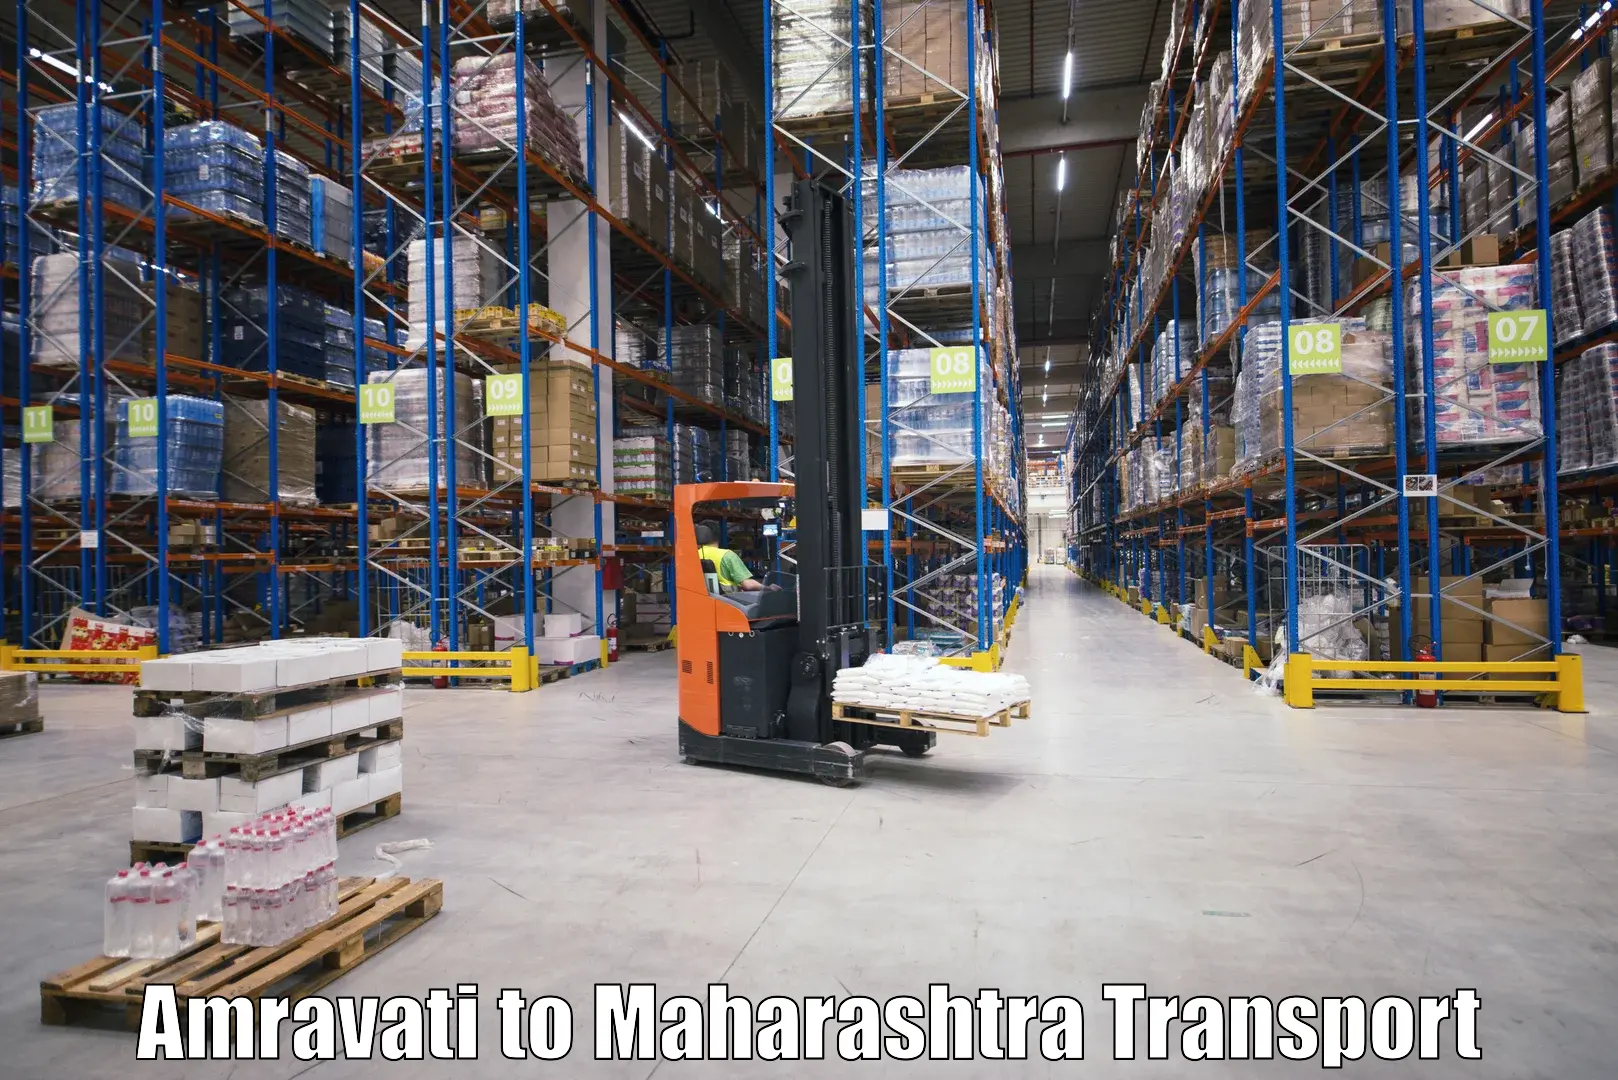 Delivery service Amravati to Dadar